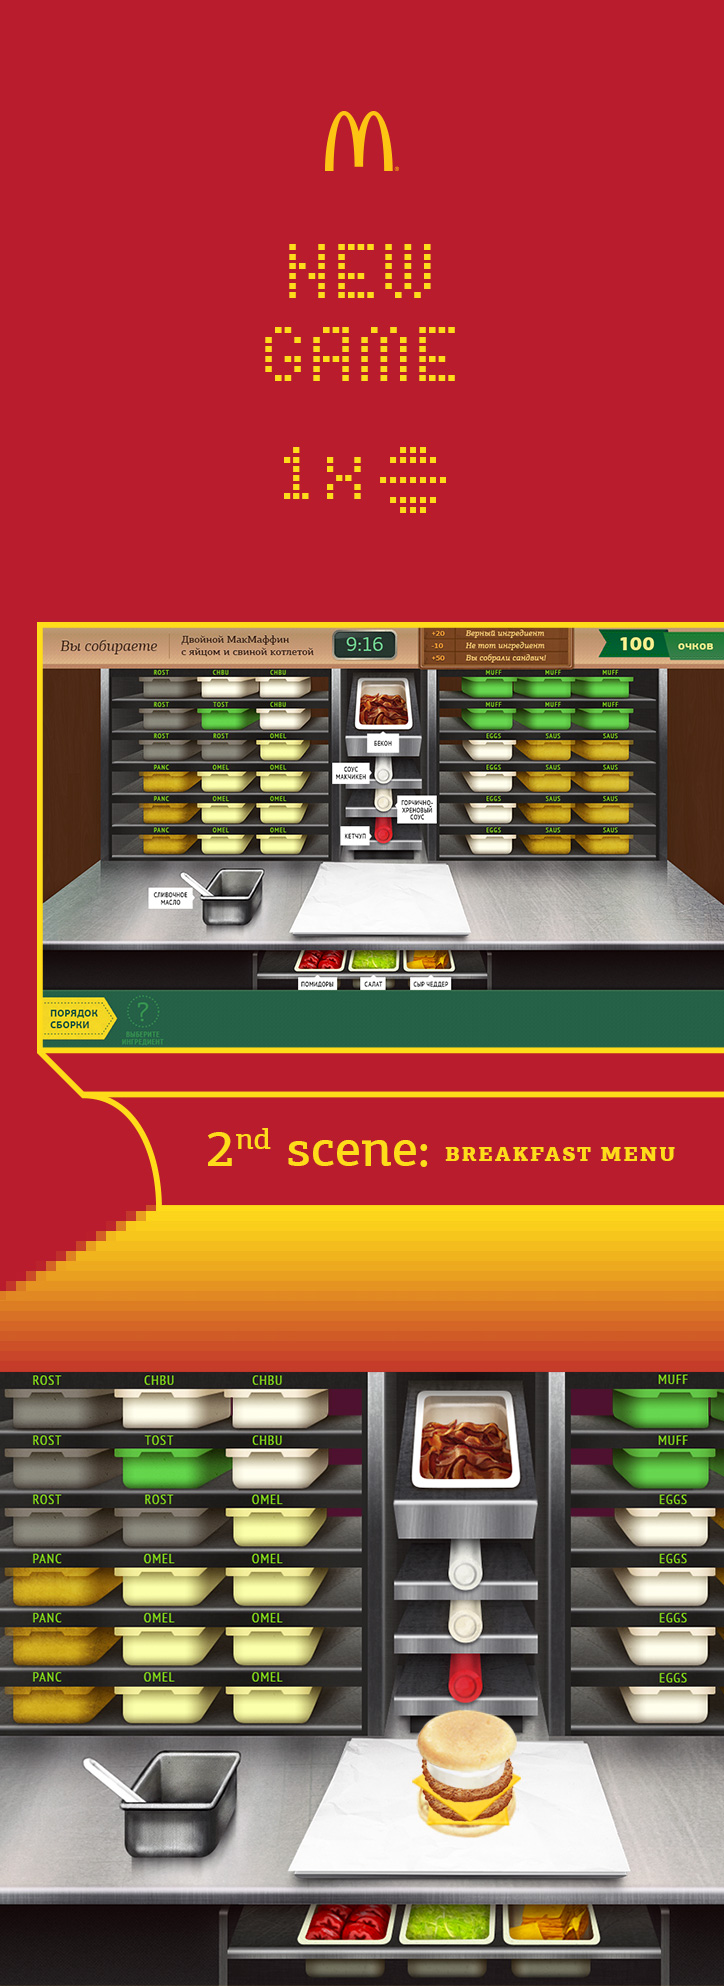 McDonald's Game second scene.